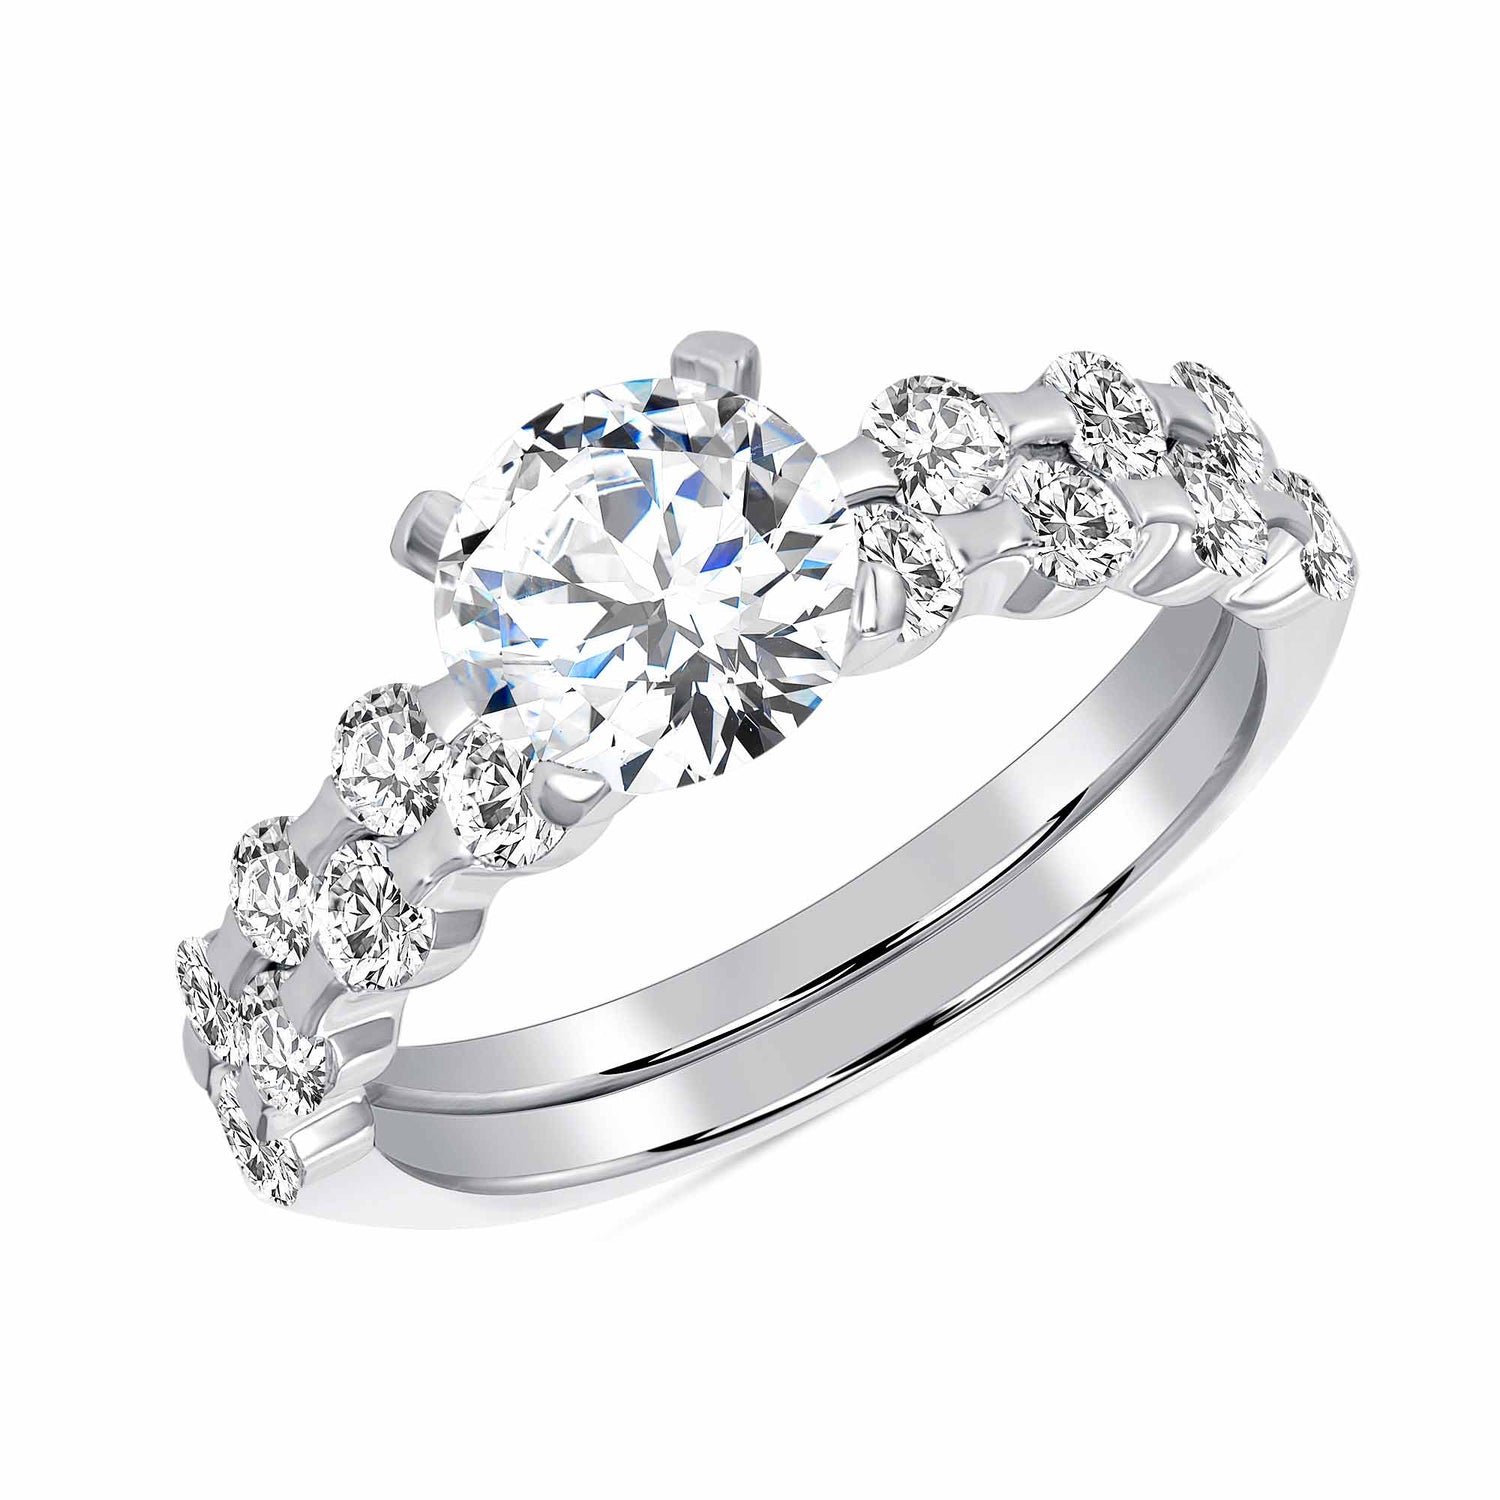 Sterling Silver 2 Piece Wedding Ring